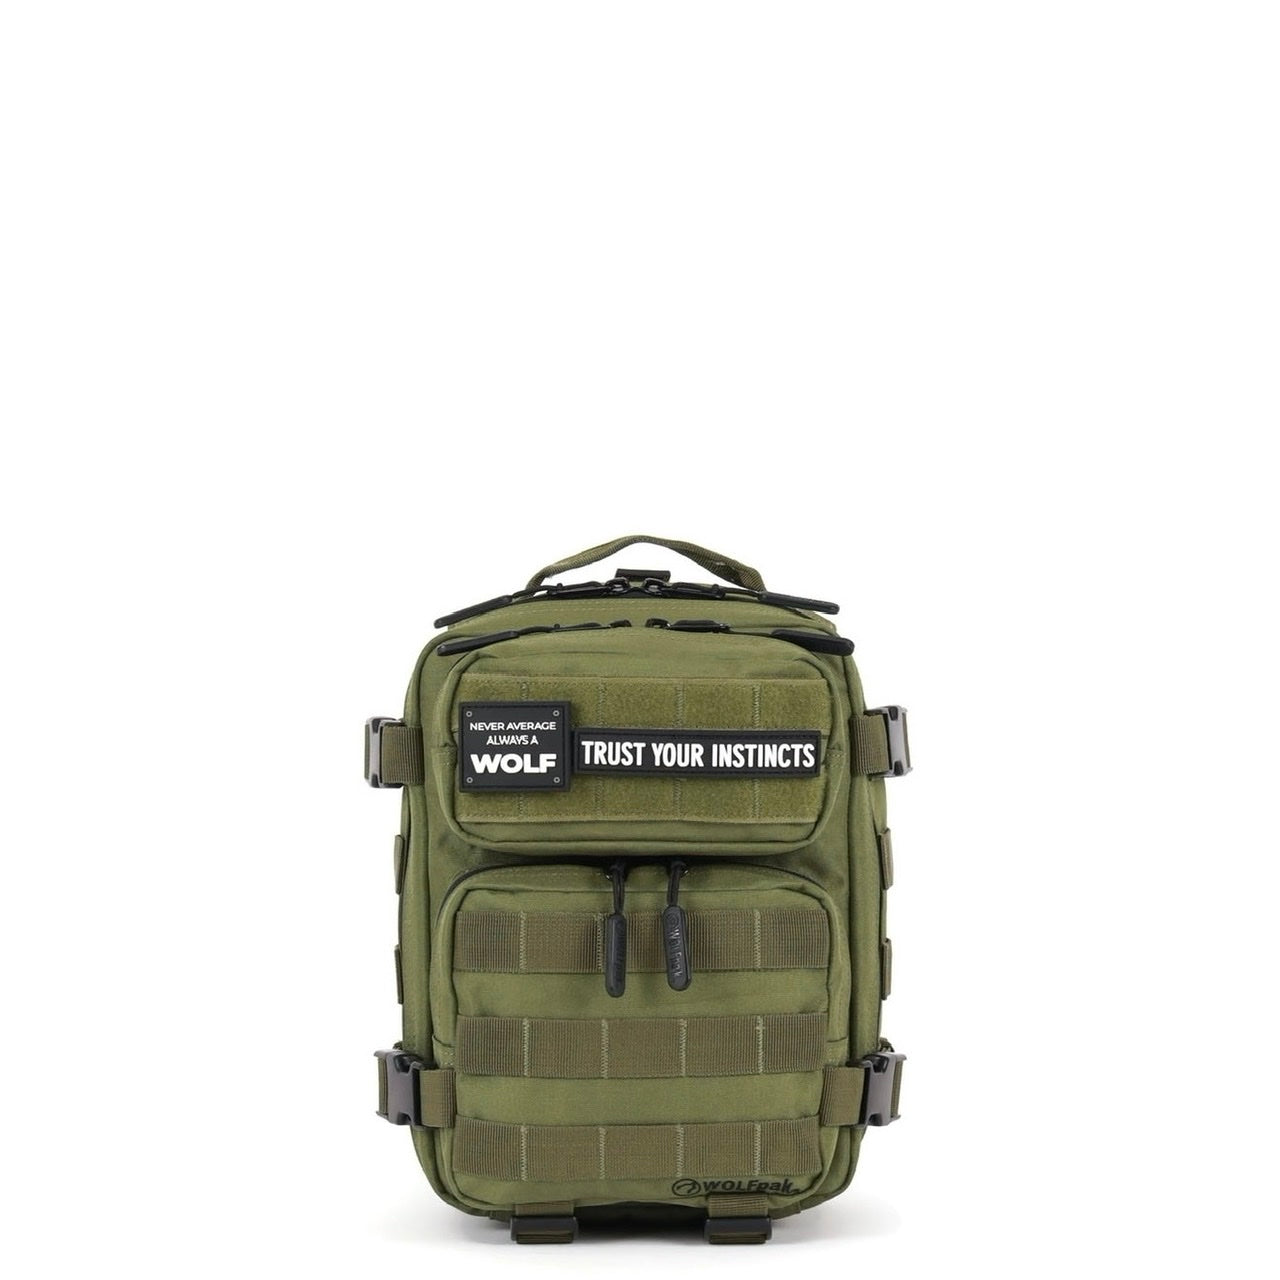 9L Backpack Mini Athletic Green